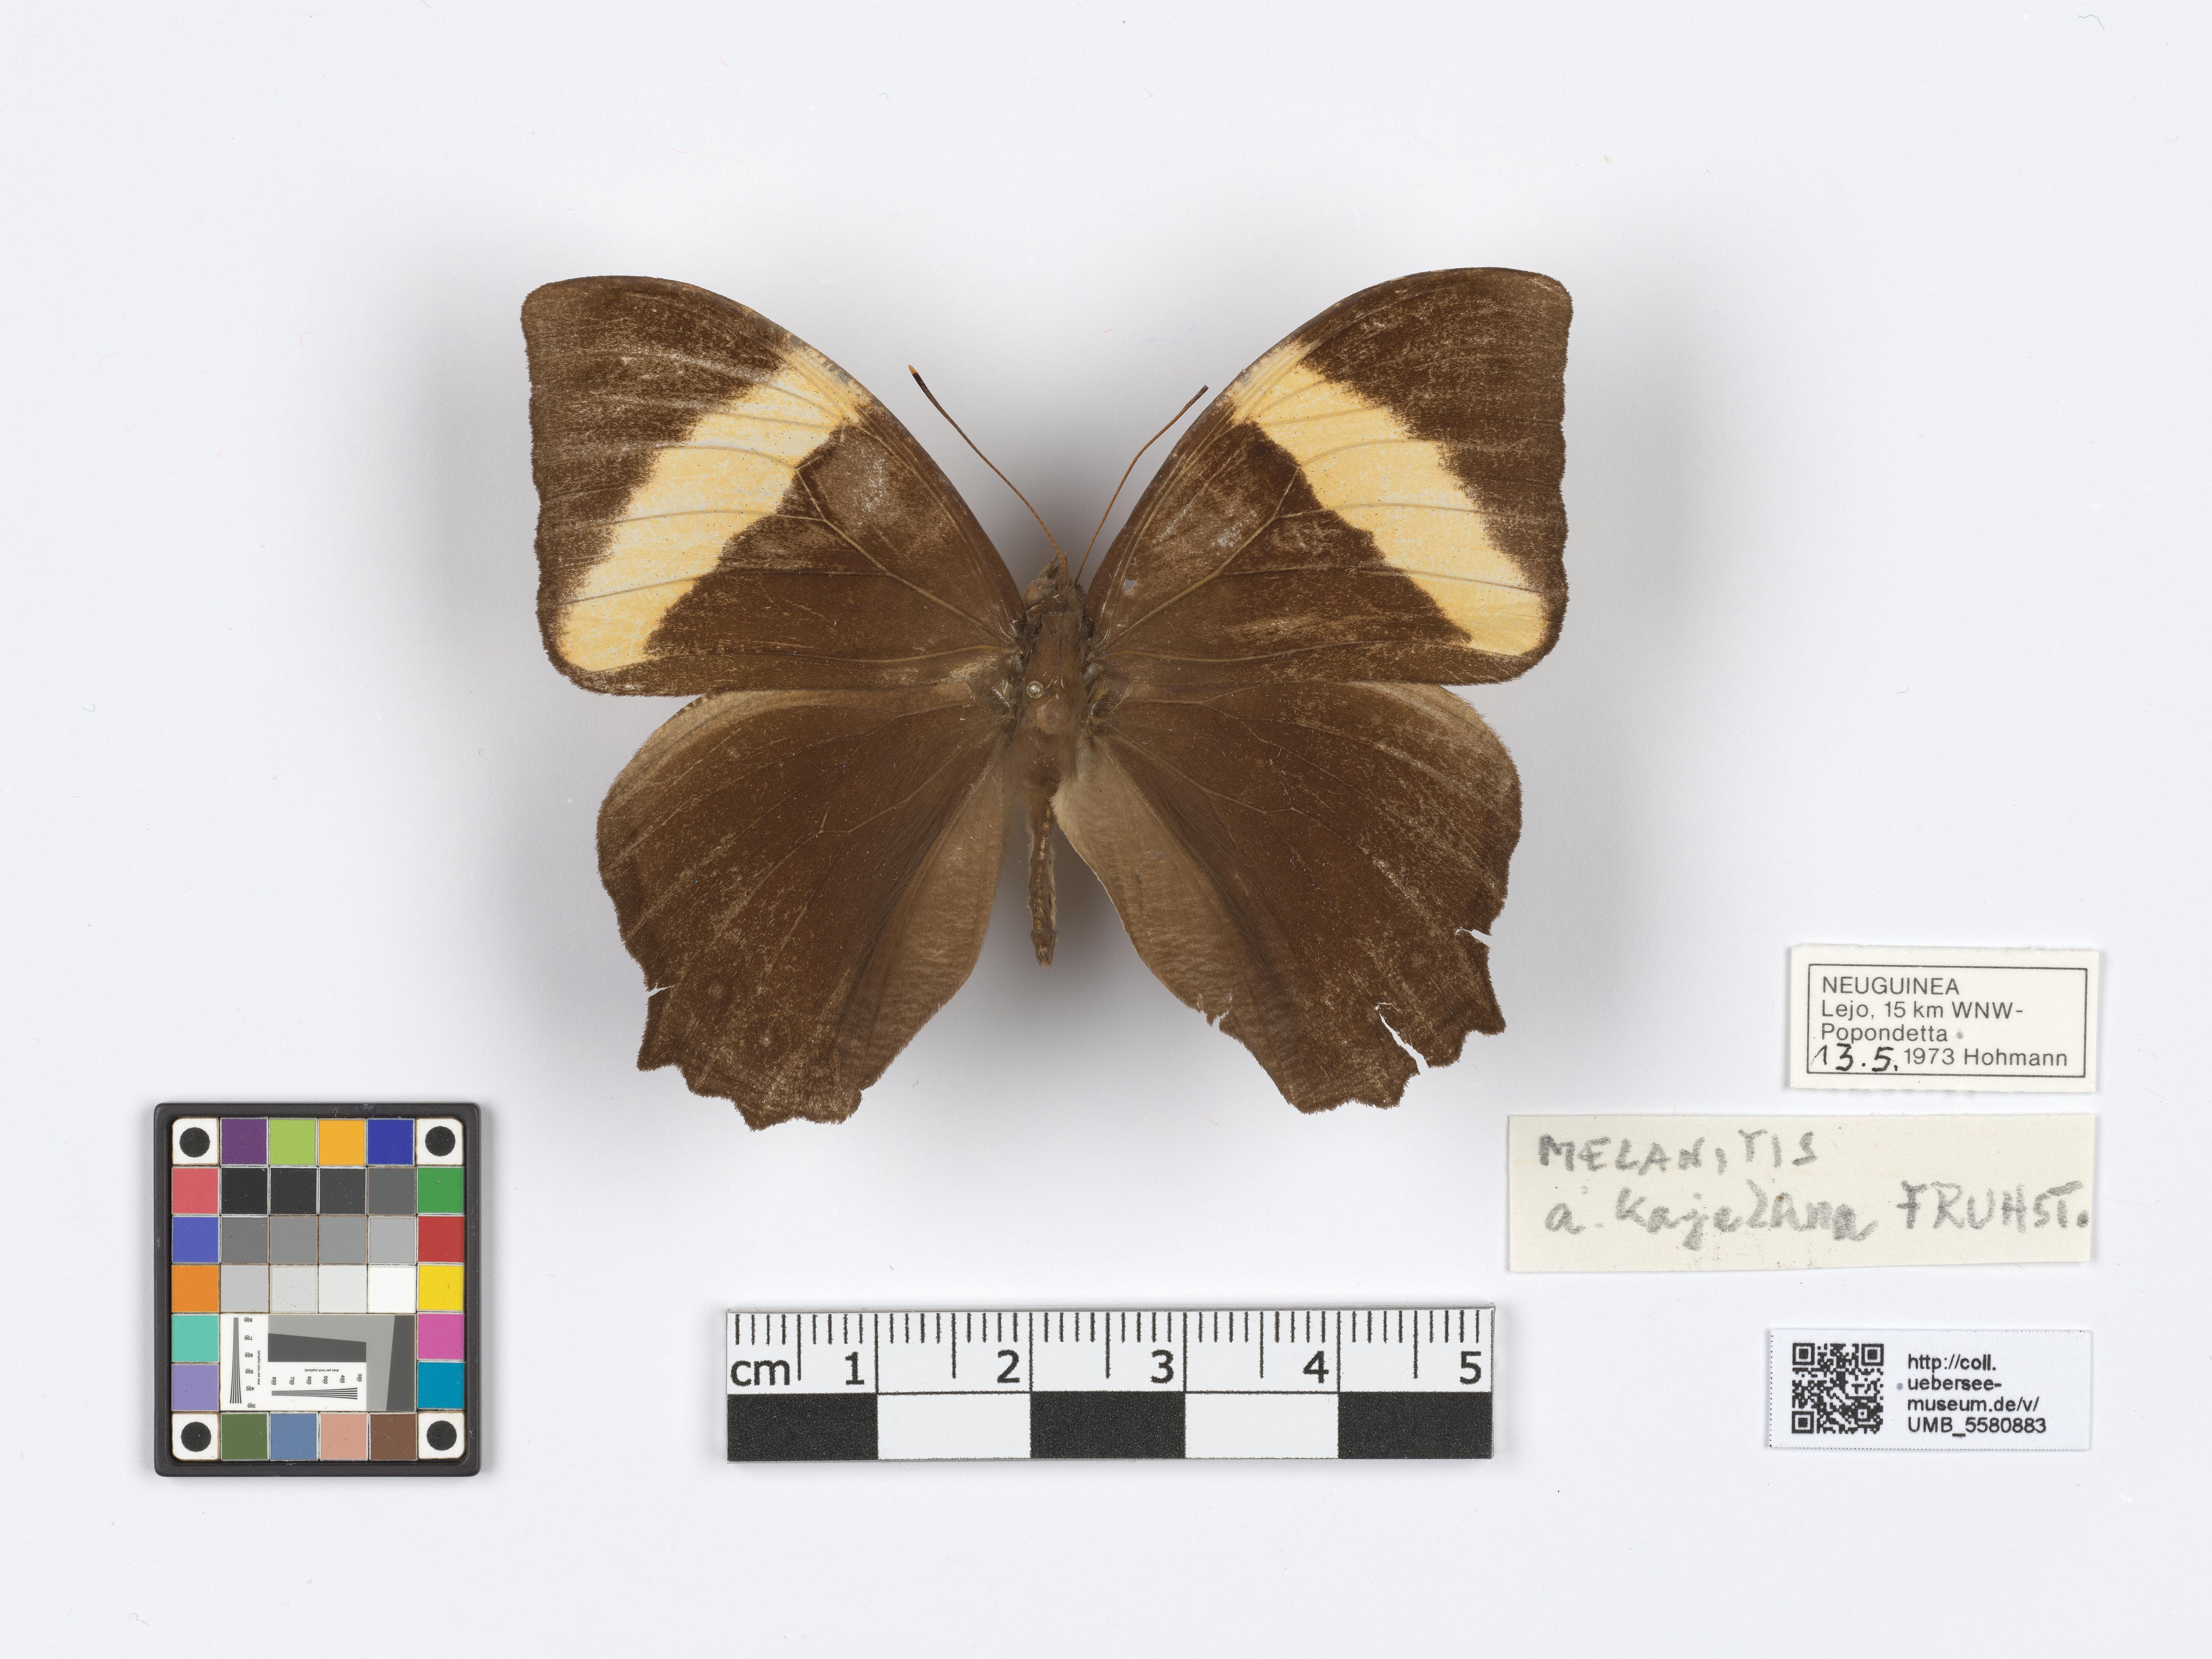 UMB_5580883 | Melanitis amabilis | genadeltes Objekt (Übersee-Museum Bremen CC BY-NC-SA)